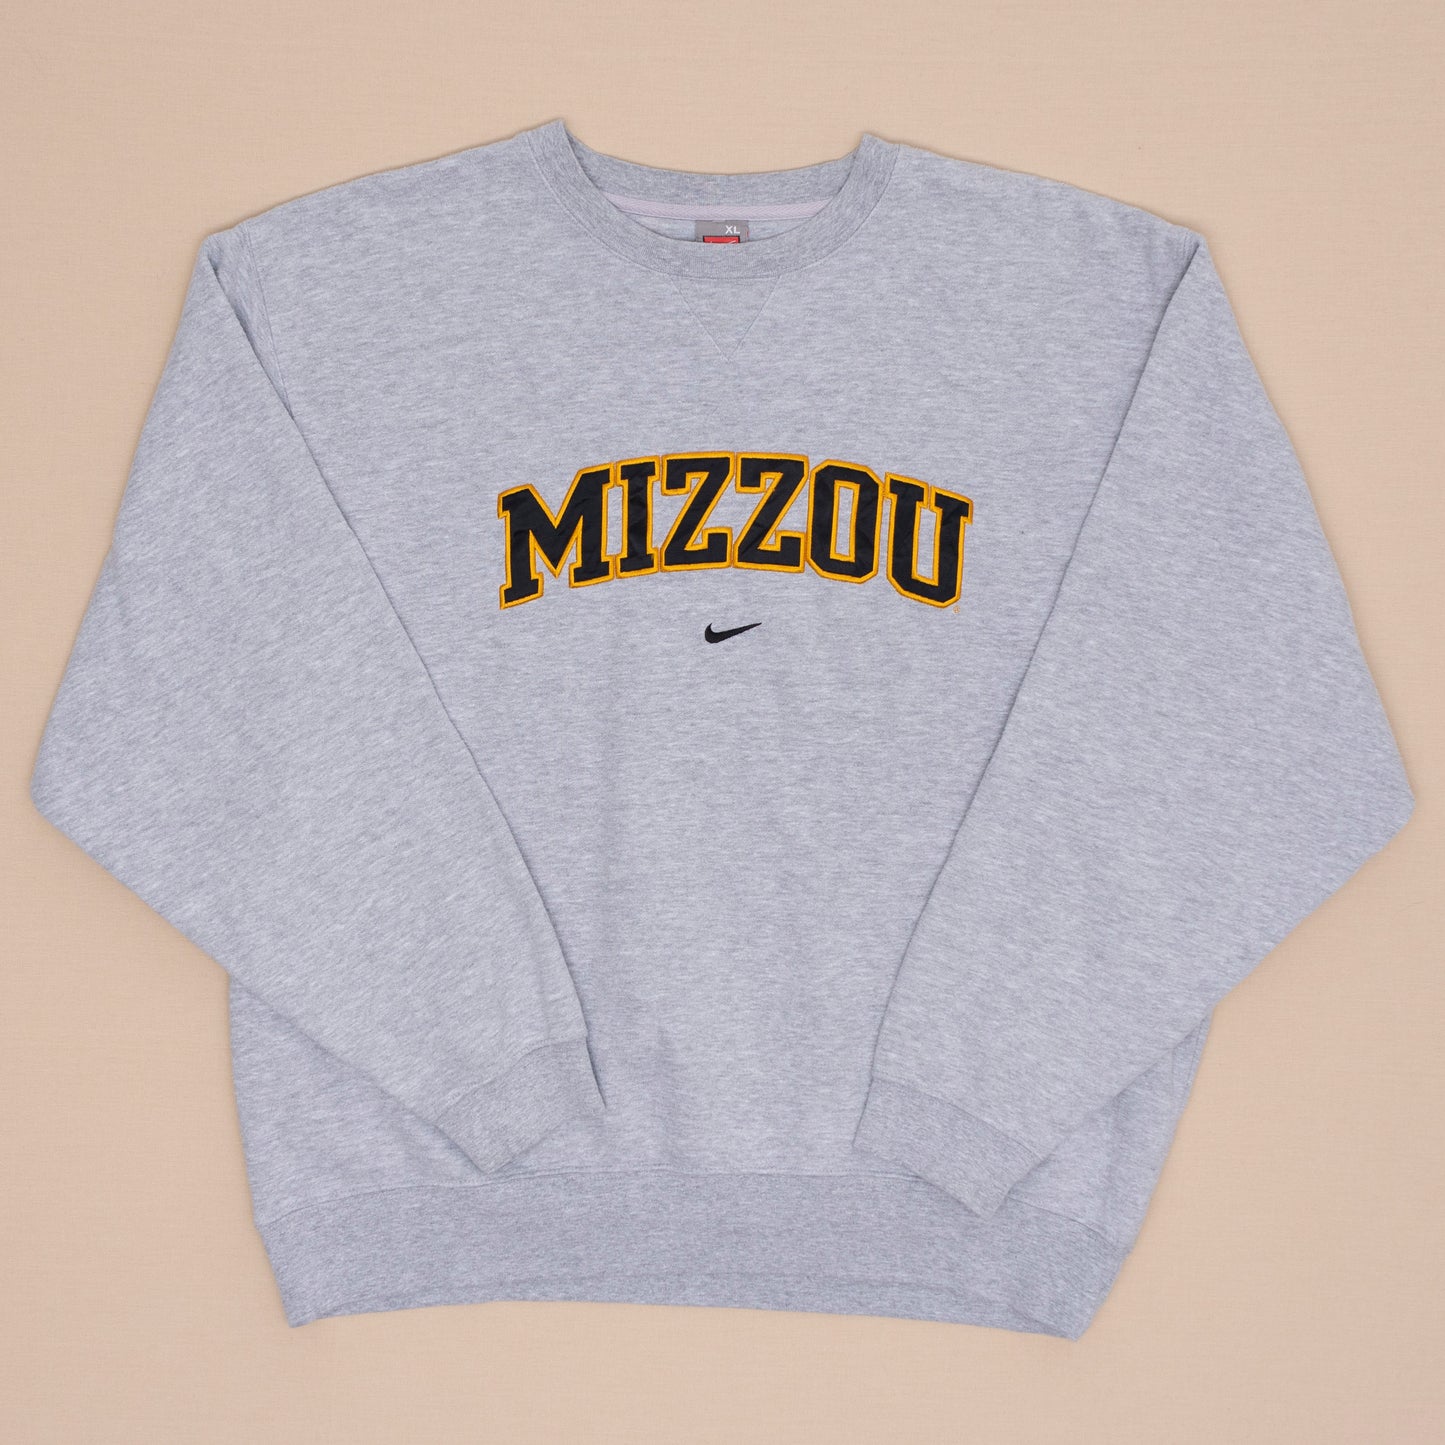 Mizzou Nike Sweater, XL